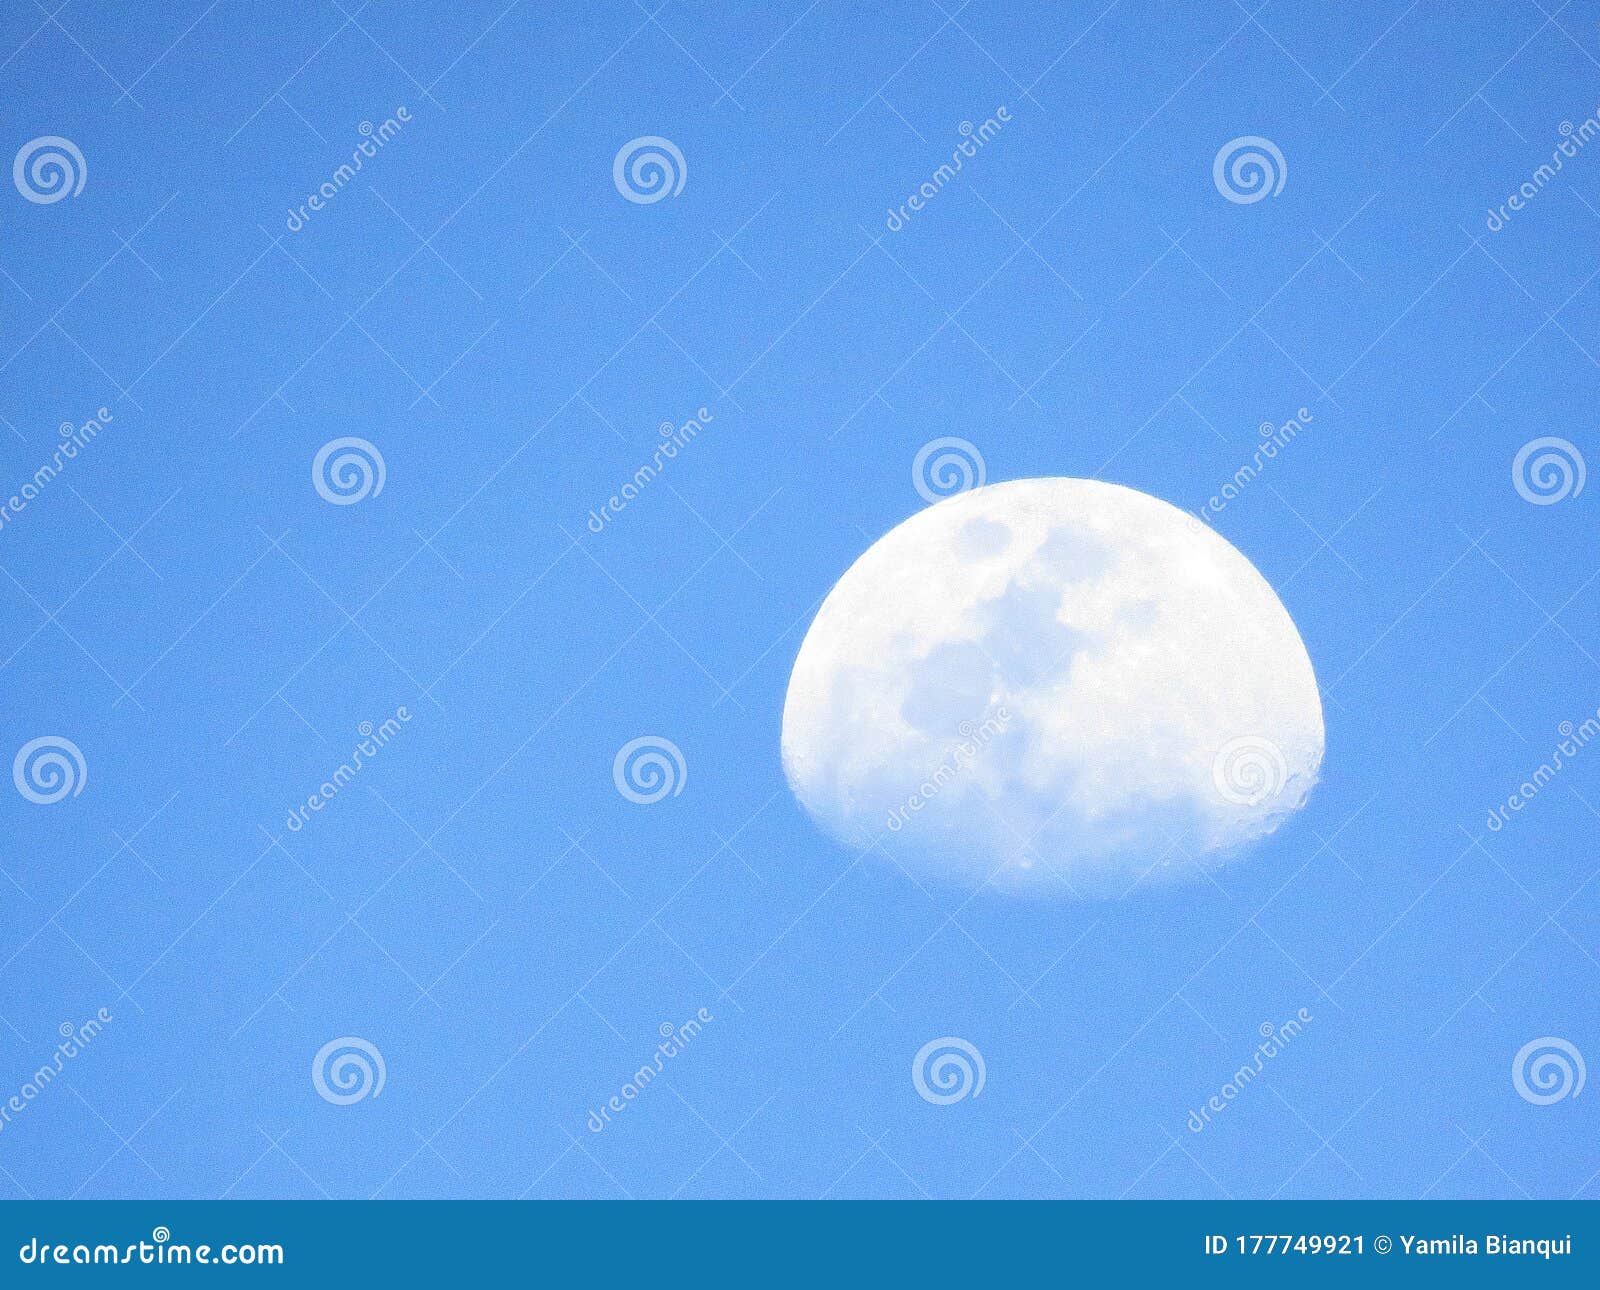 white moon in pixelated celestial sky